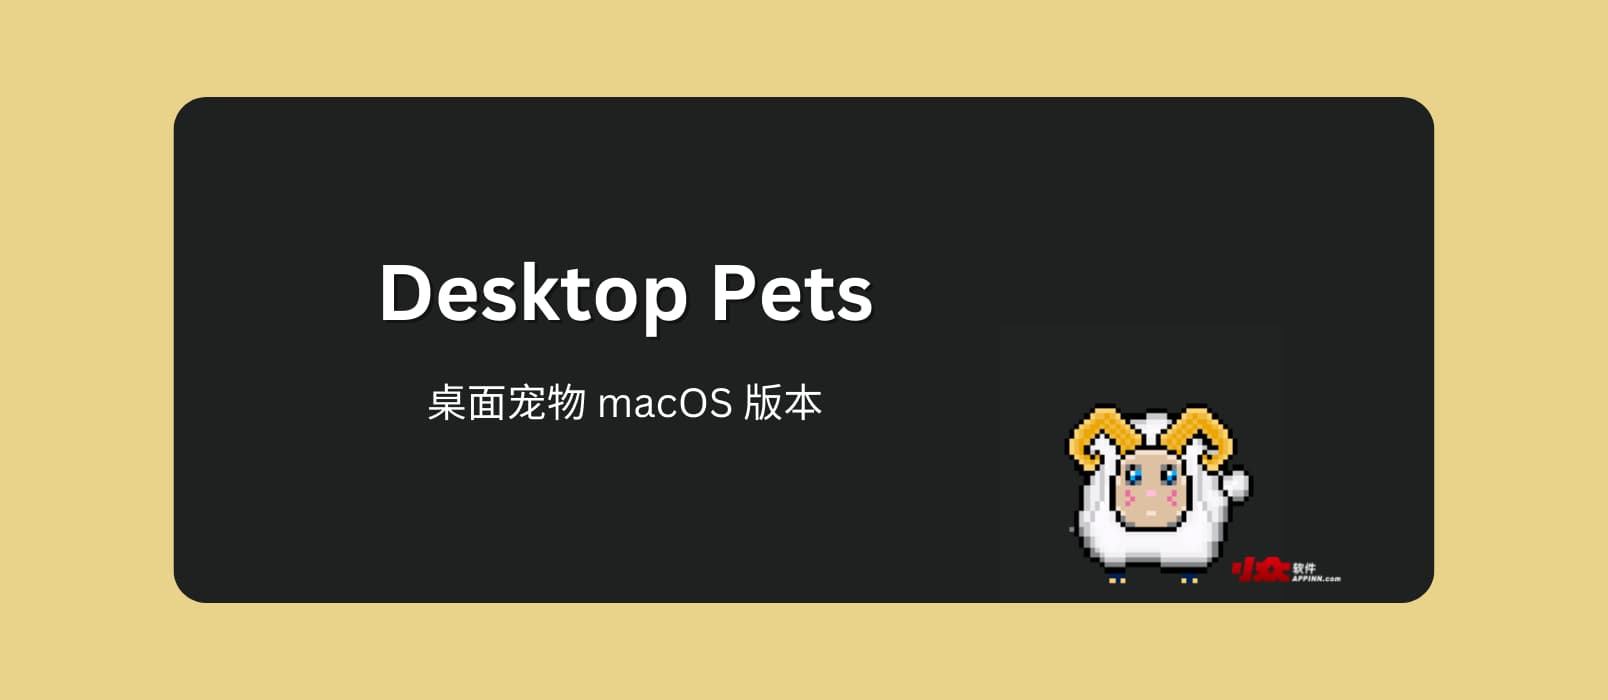 Desktop Pets - 那只羊，桌面宠物 macOS 版本 1